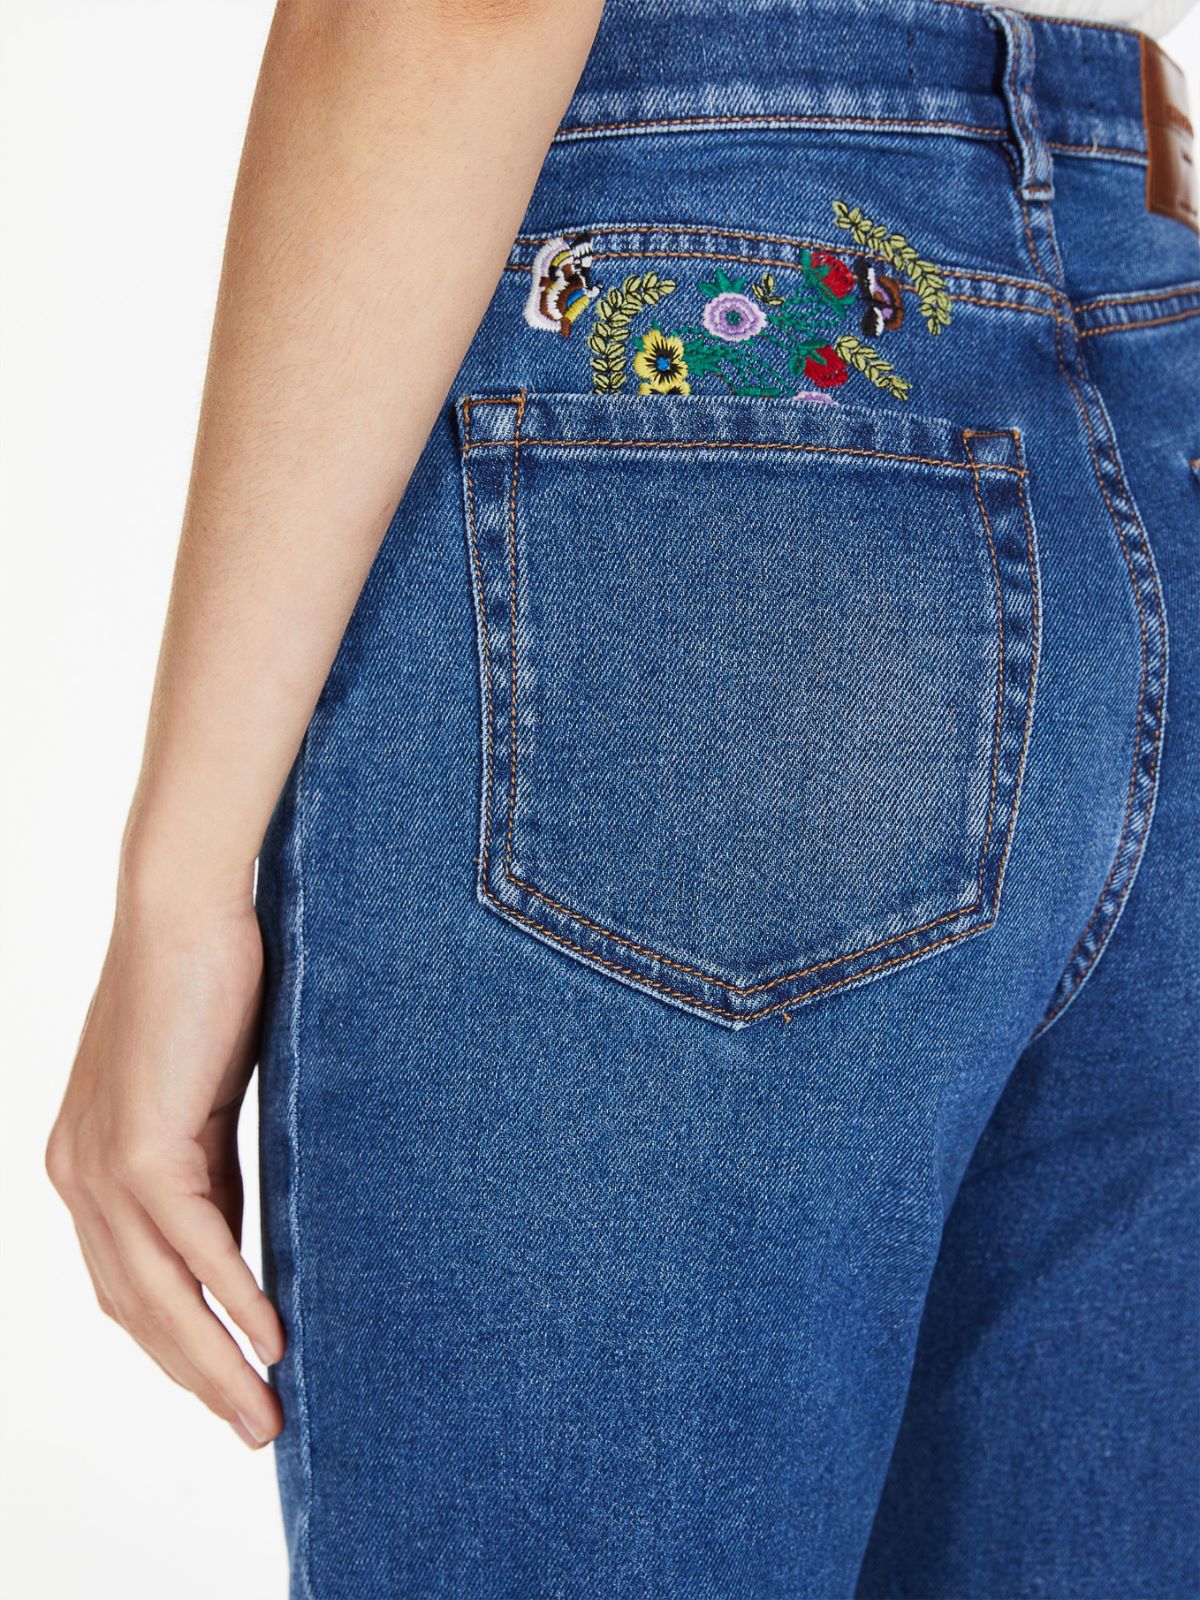 Jeans in organic cotton denim - NAVY - Weekend Max Mara - 5